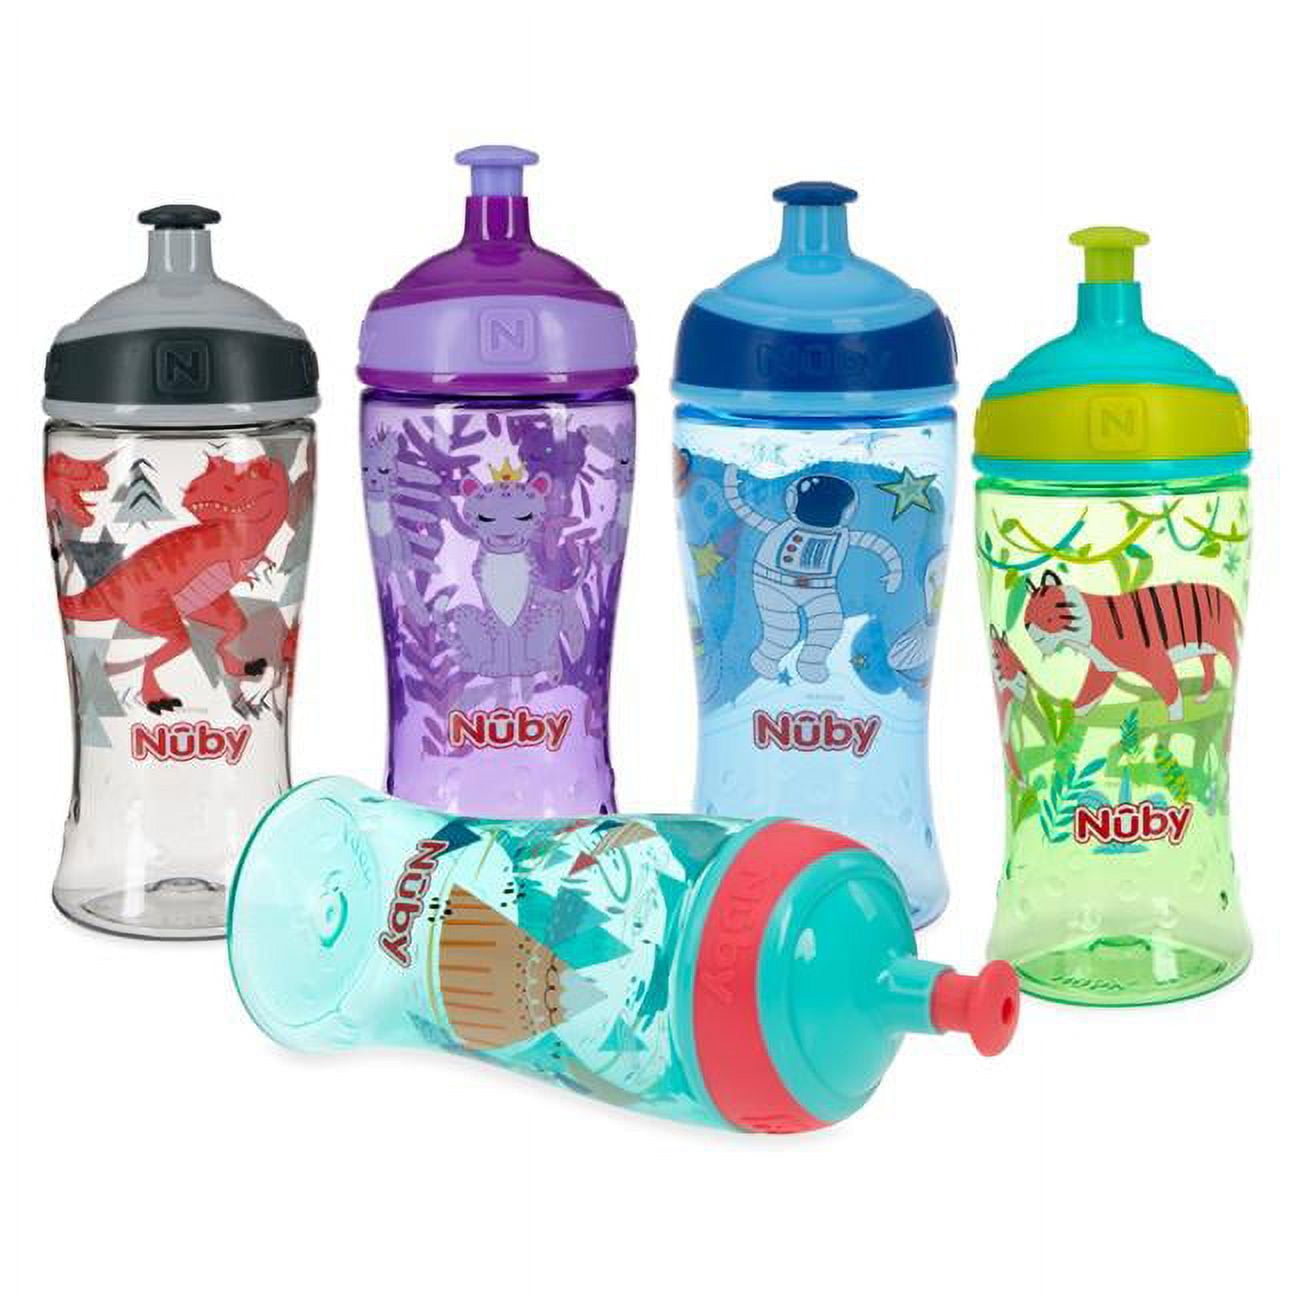 Picture of Nuby 2364771 12 oz Nuby Pop Up Super Slurp Jungle Animals Water Bottles - Case of 24 - Pack of 24